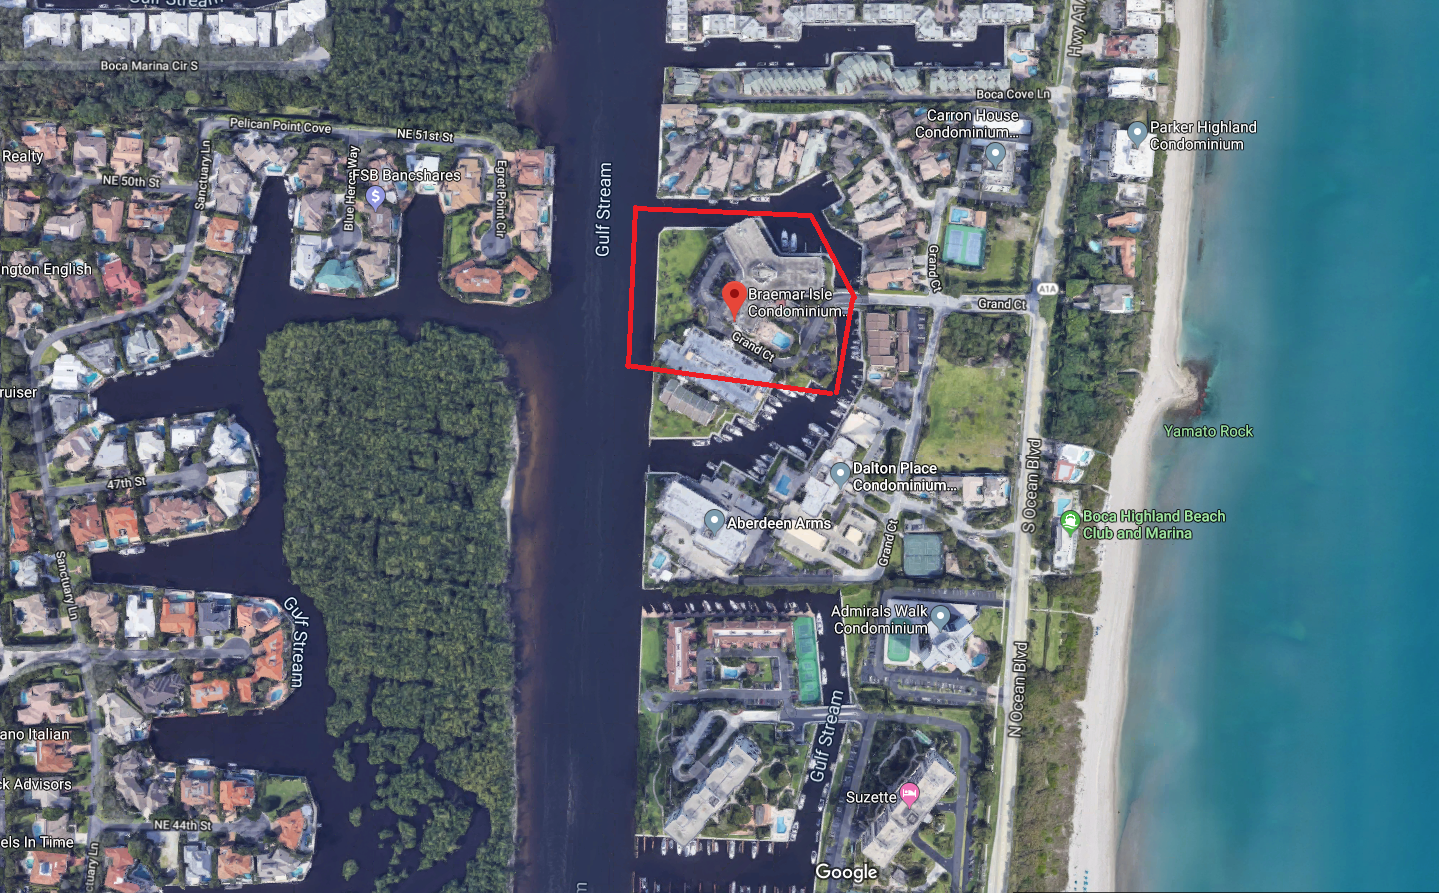 Braemar Isle 4740 S Ocean Blvd, Highland Beach, FL 33487 luxury condos for sale aerial